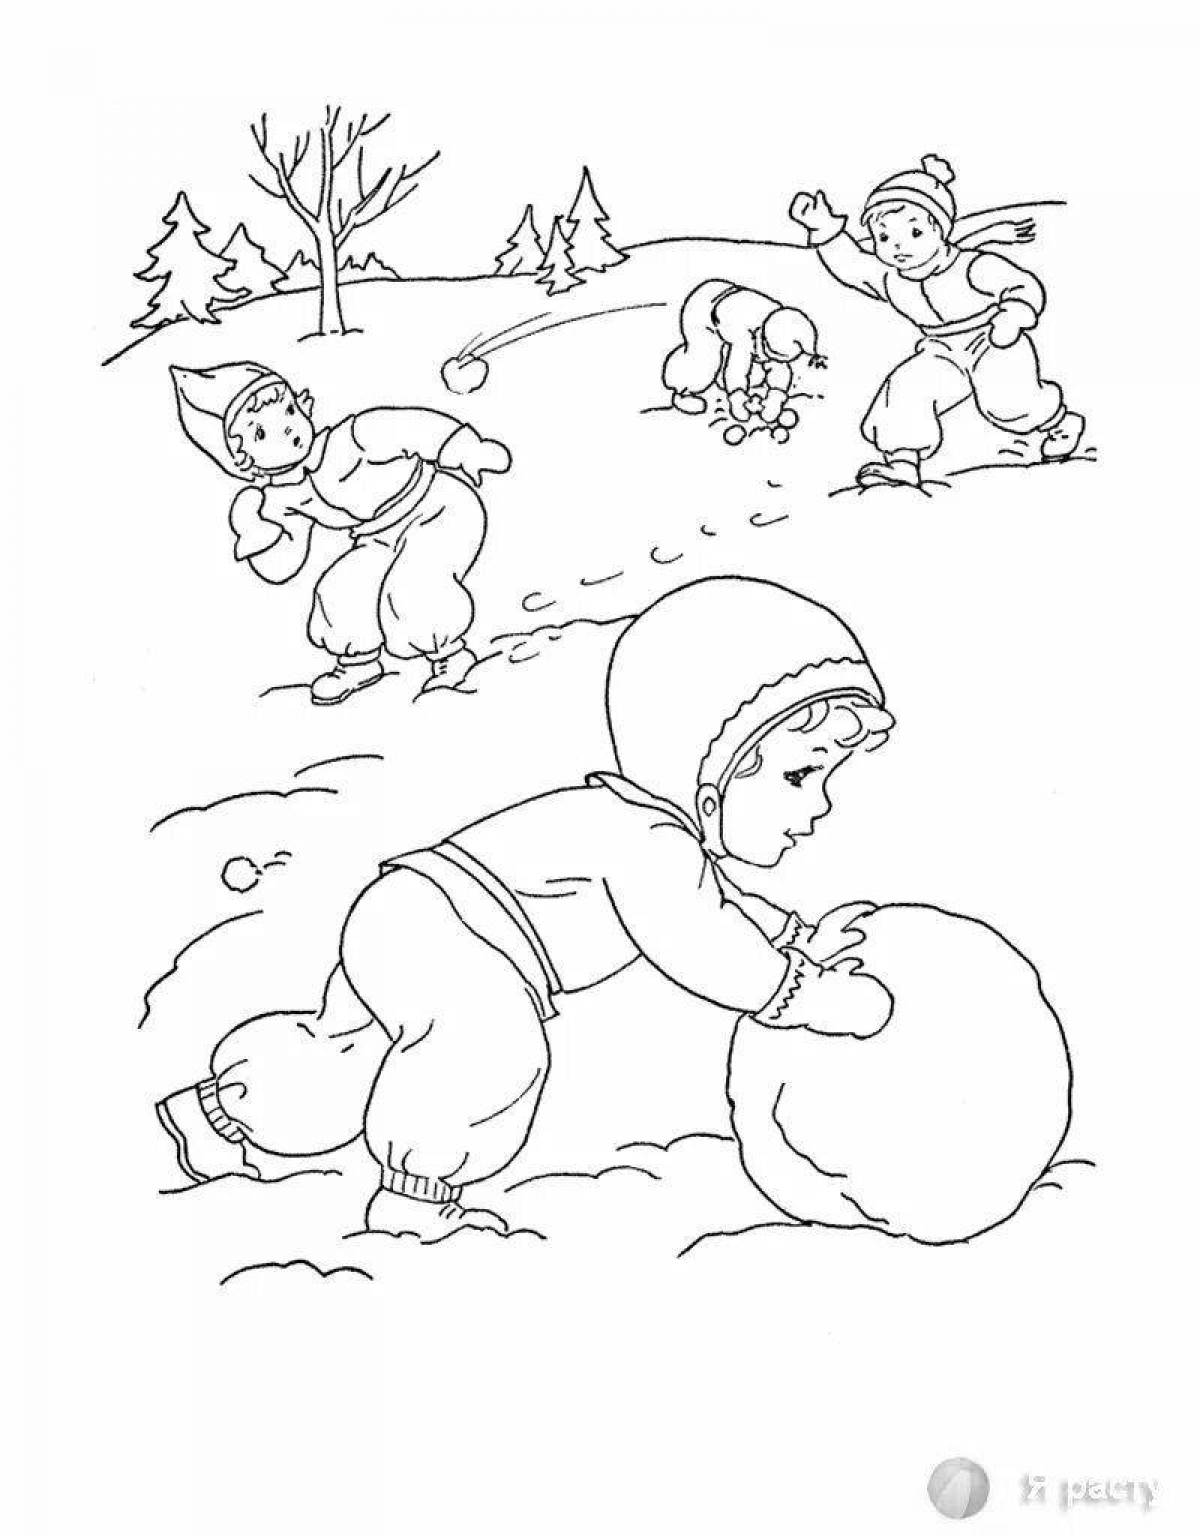 Coloring page holiday kids playing snowballs